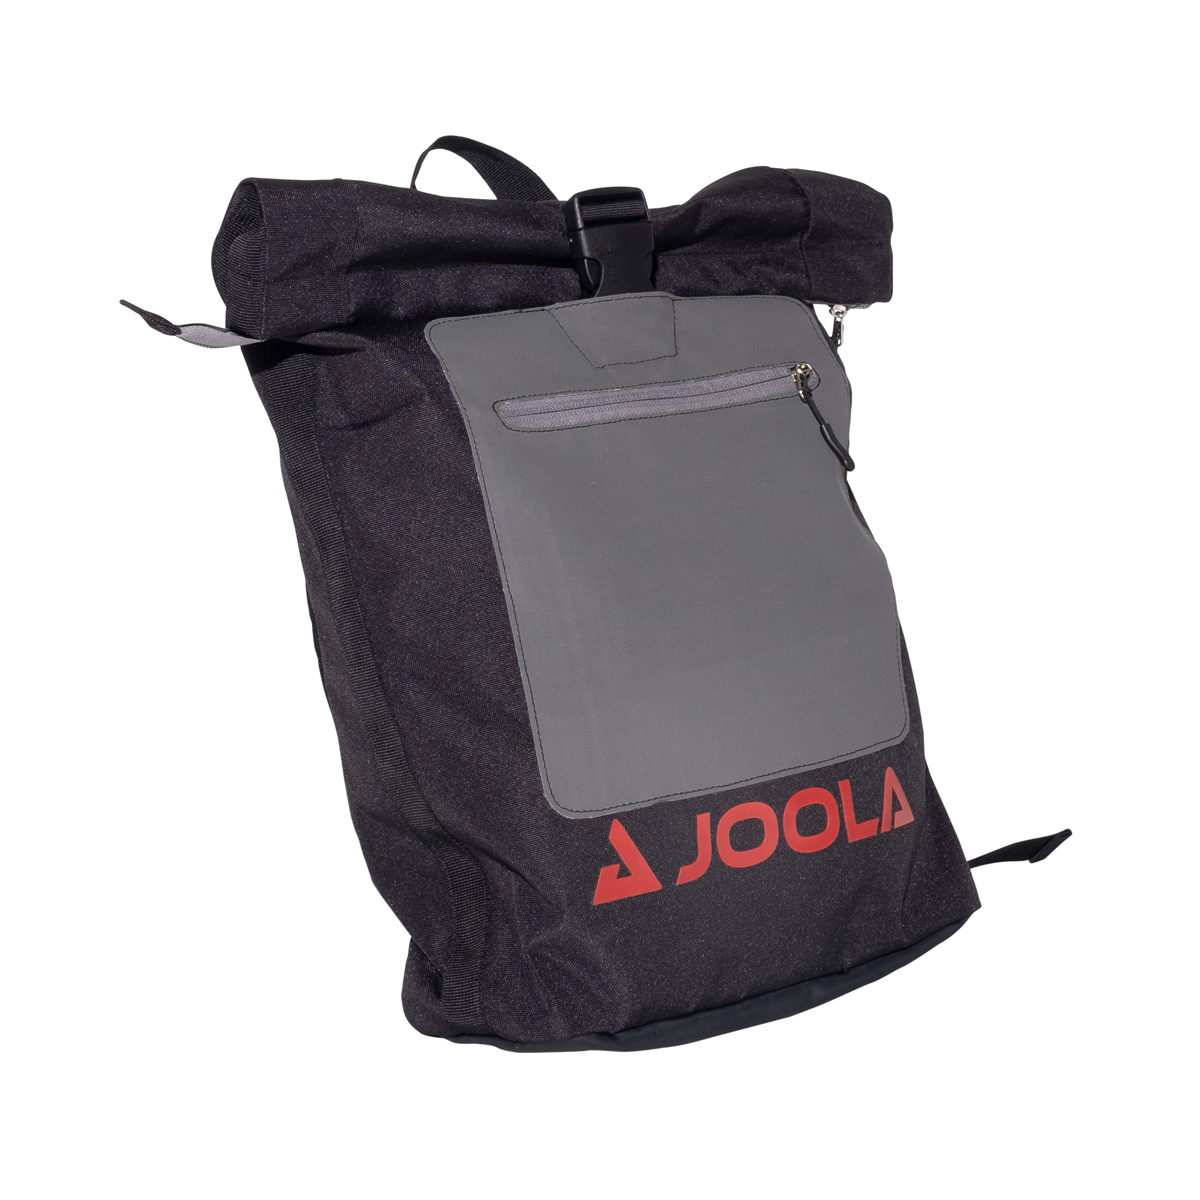 JOOLA VISION VORTEX Backpack